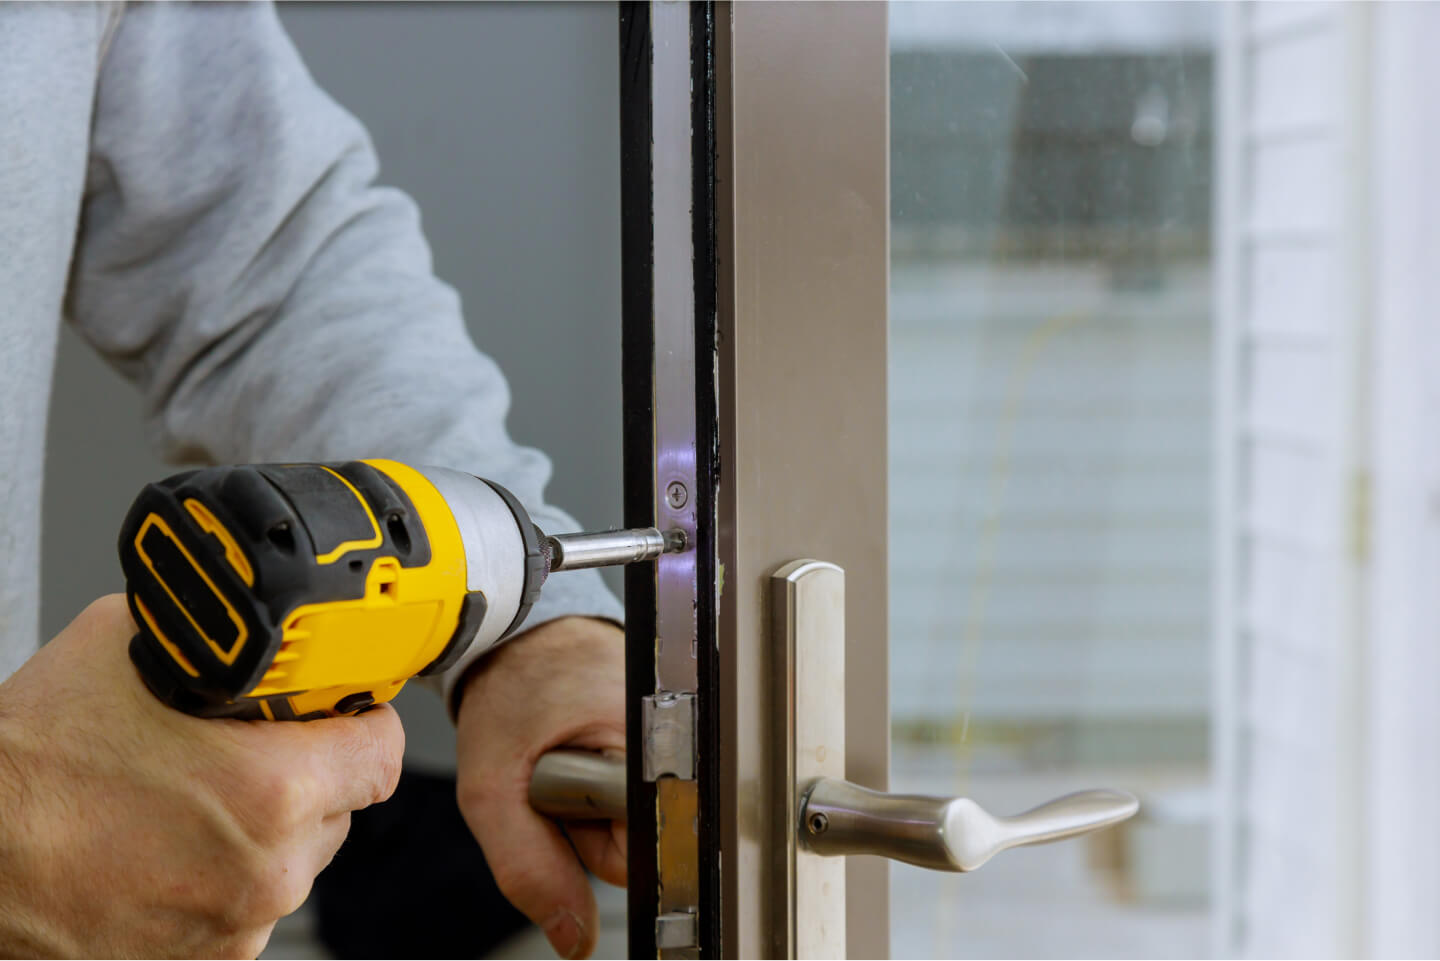 locksmith-in-installing-new-house-door-lock-hand-h-2021-08-29-01-07-52-utc